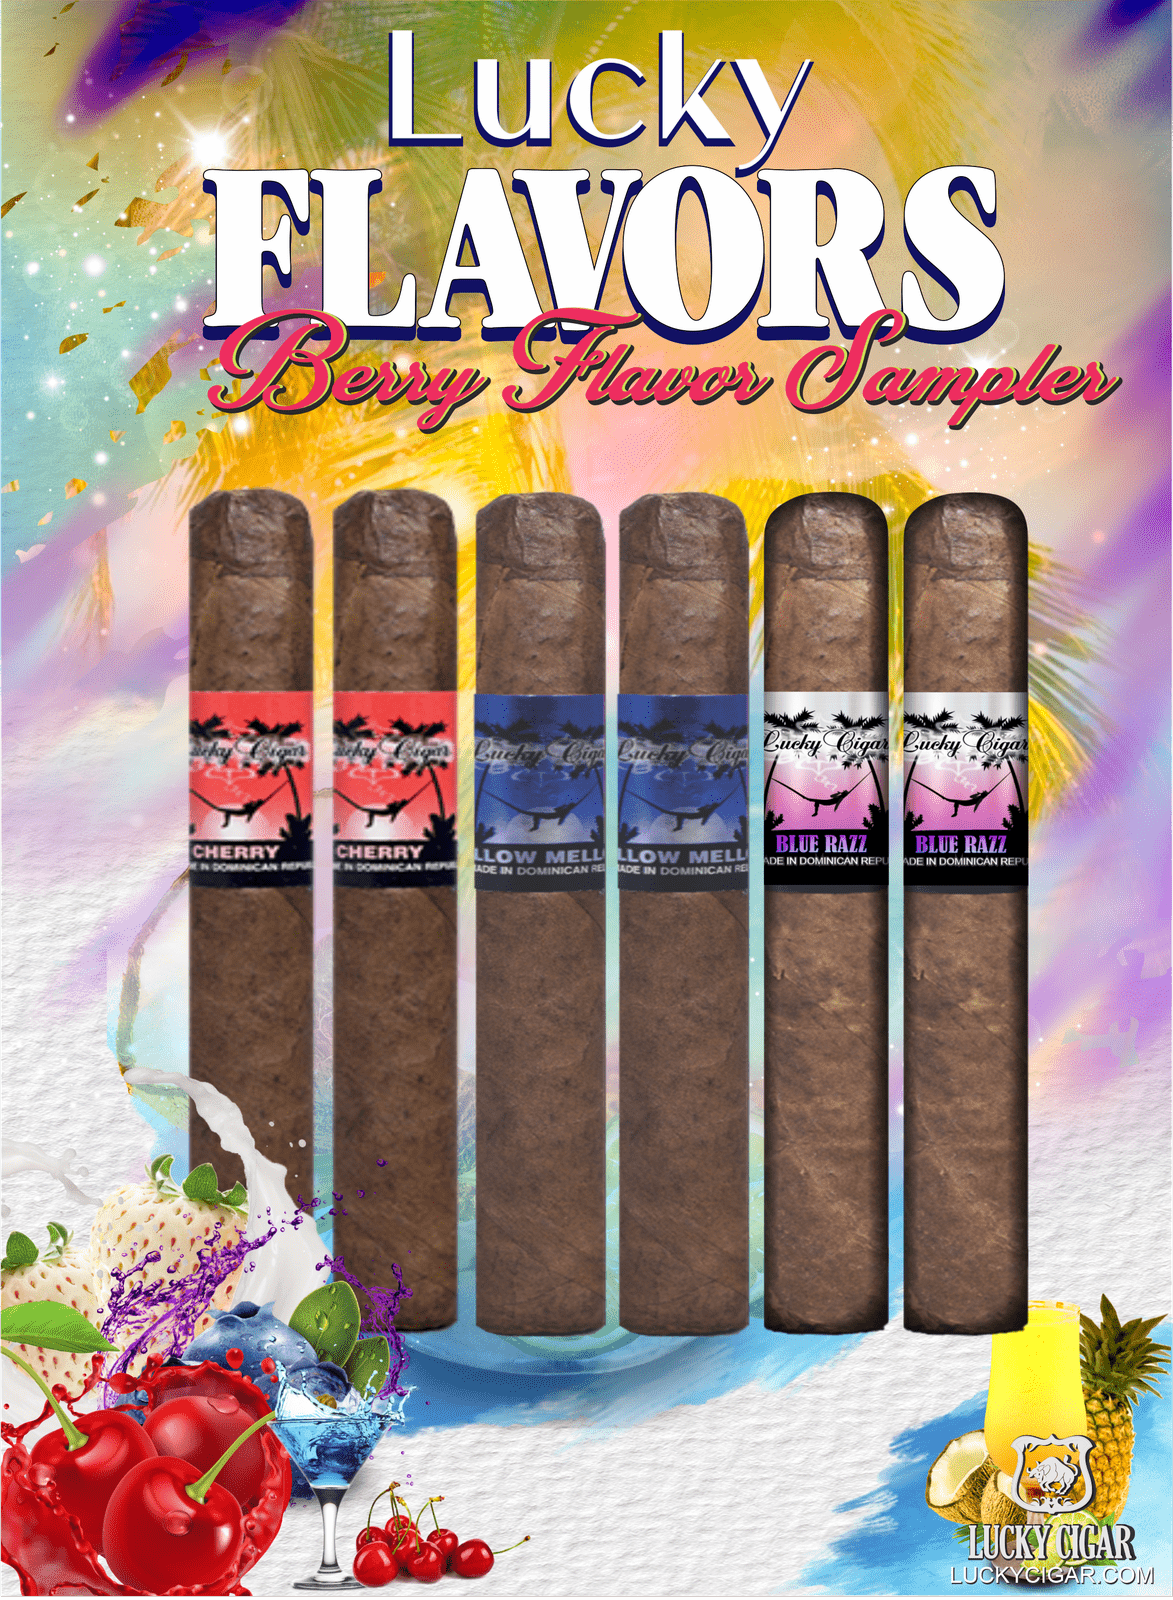 Flavored Cigars: Lucky Flavors 6 Piece Berry Fruit Sampler - Cherry, Blue Razz, Mellow